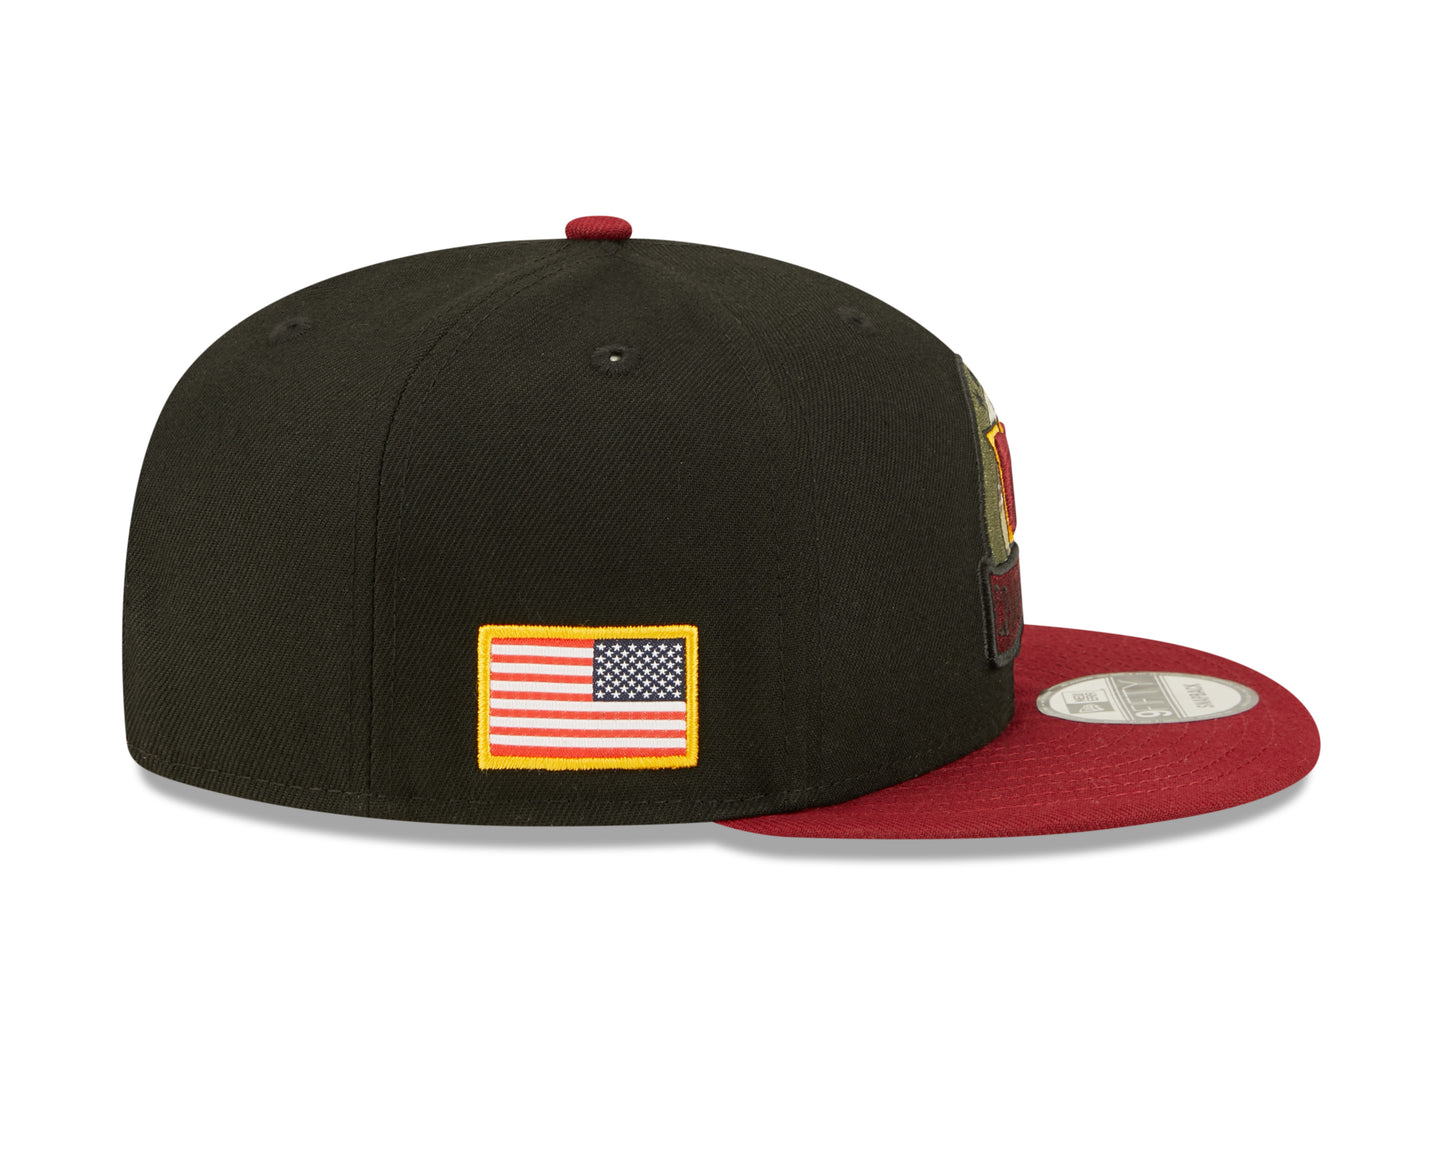 Washington Commanders New Era Salute To Service 9Fifty Adjustable Hat